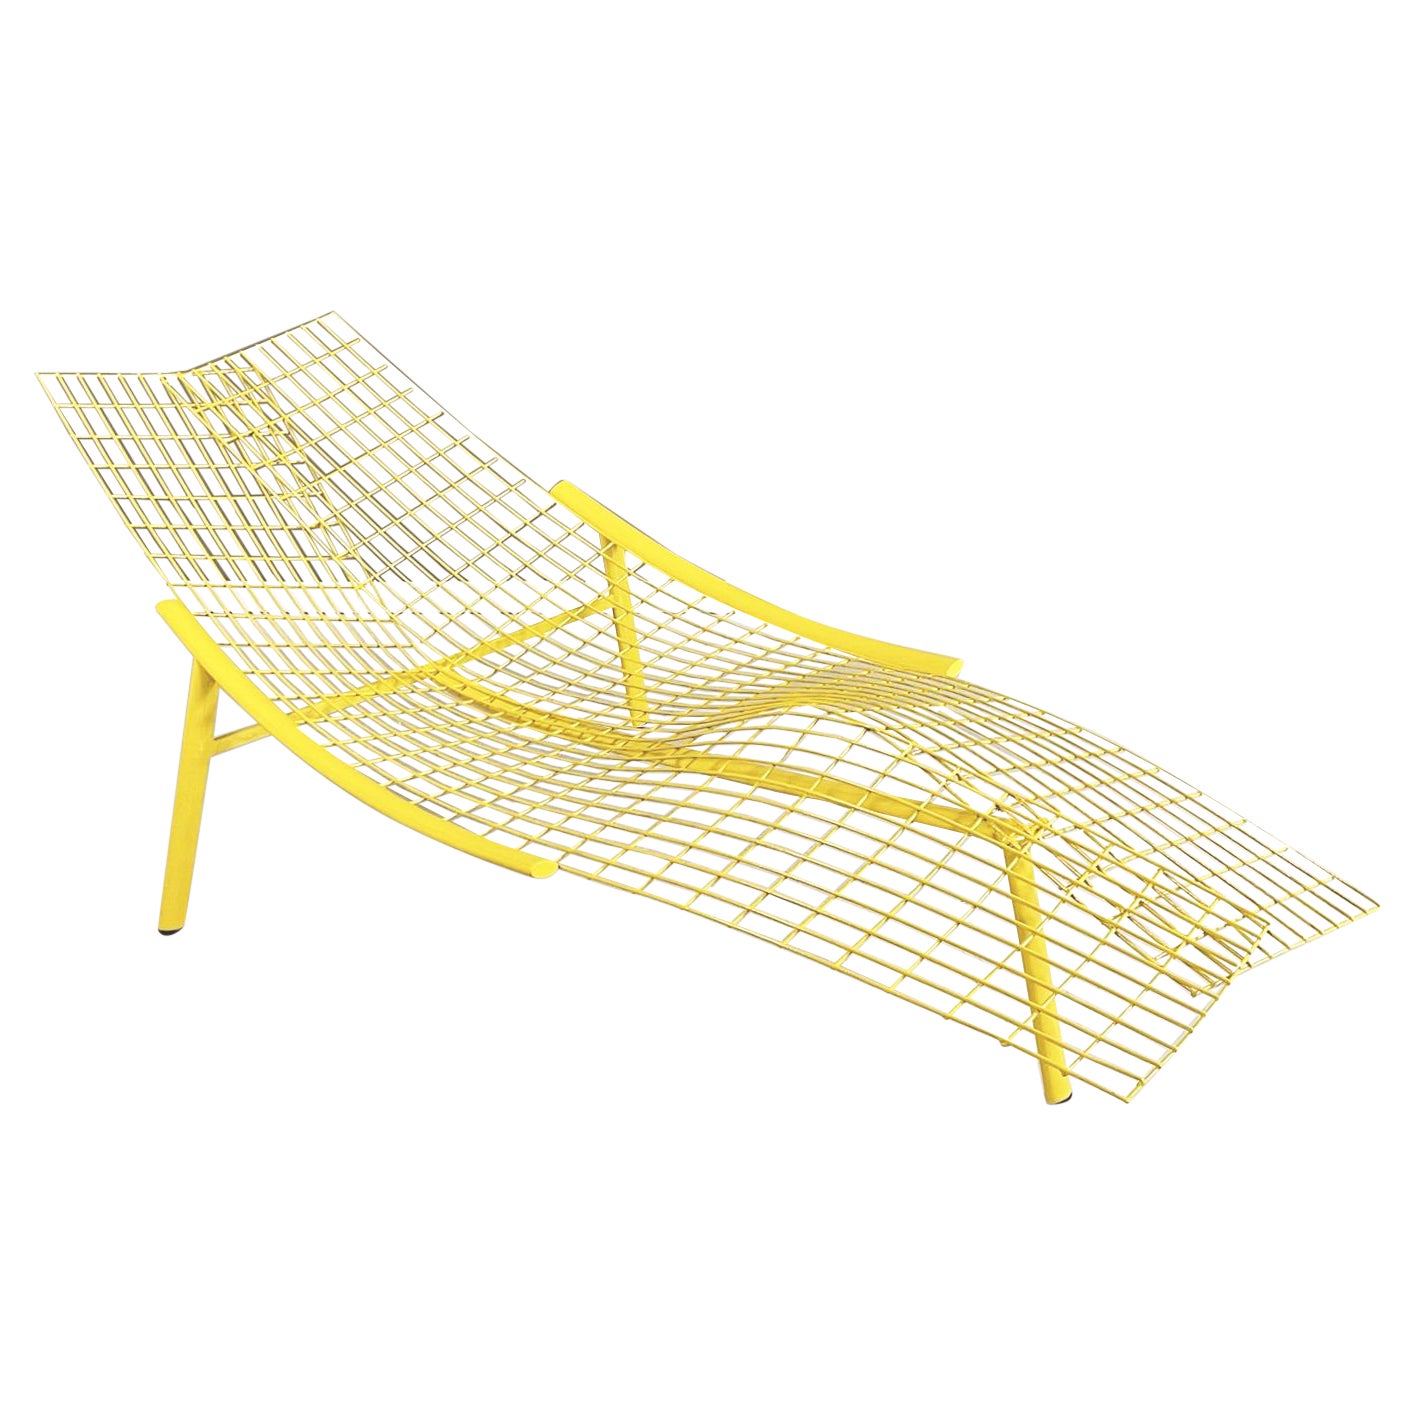 Italian modern Yellow metal Deck chair Swing Rete by Offredi for Saporiti, 1980s For Sale